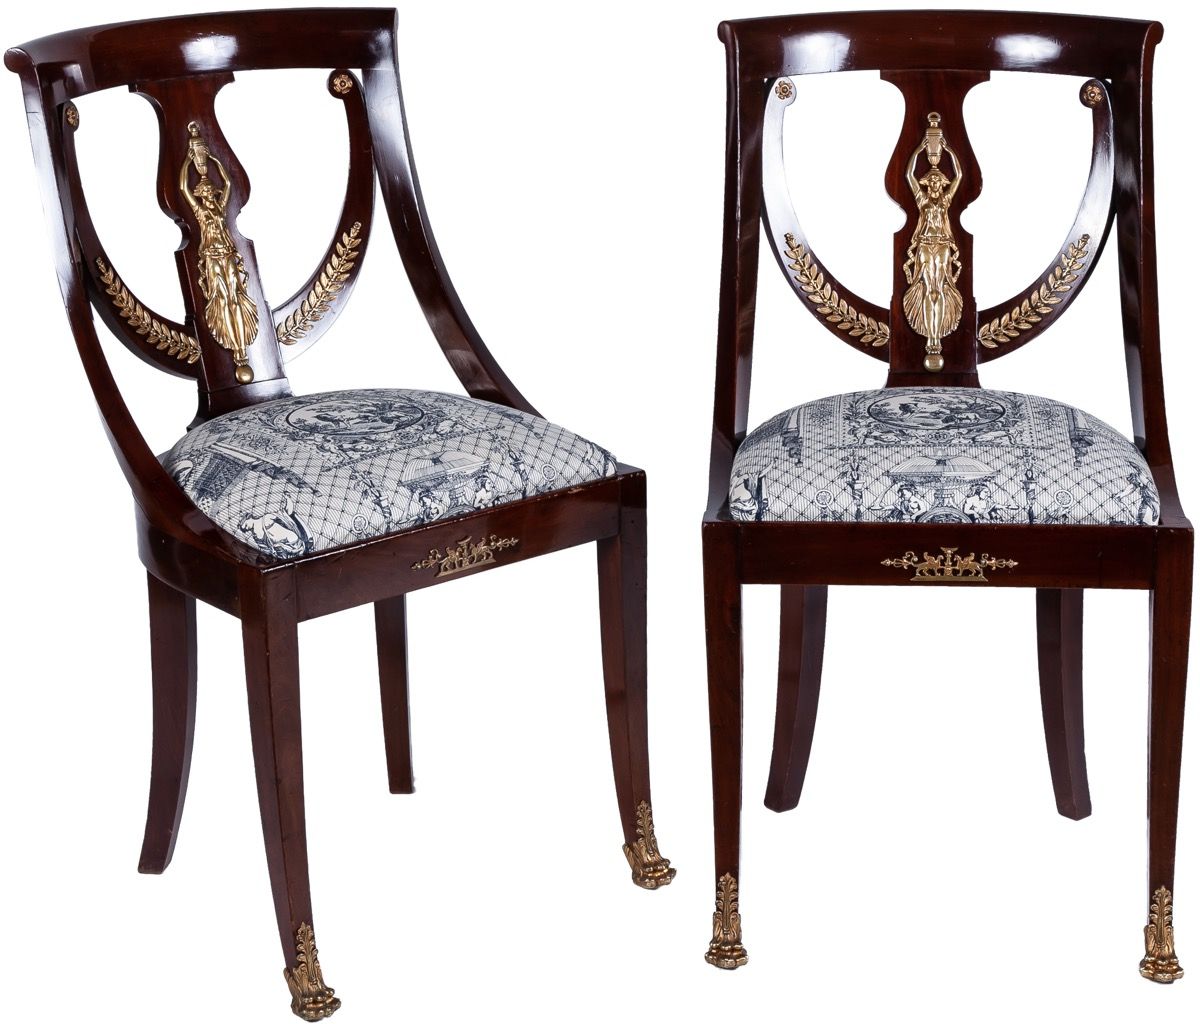 Null 一对帝国风格的铜制桃花心木贡多拉扶手椅
89 x 39 x 48厘米
200 - 250 €